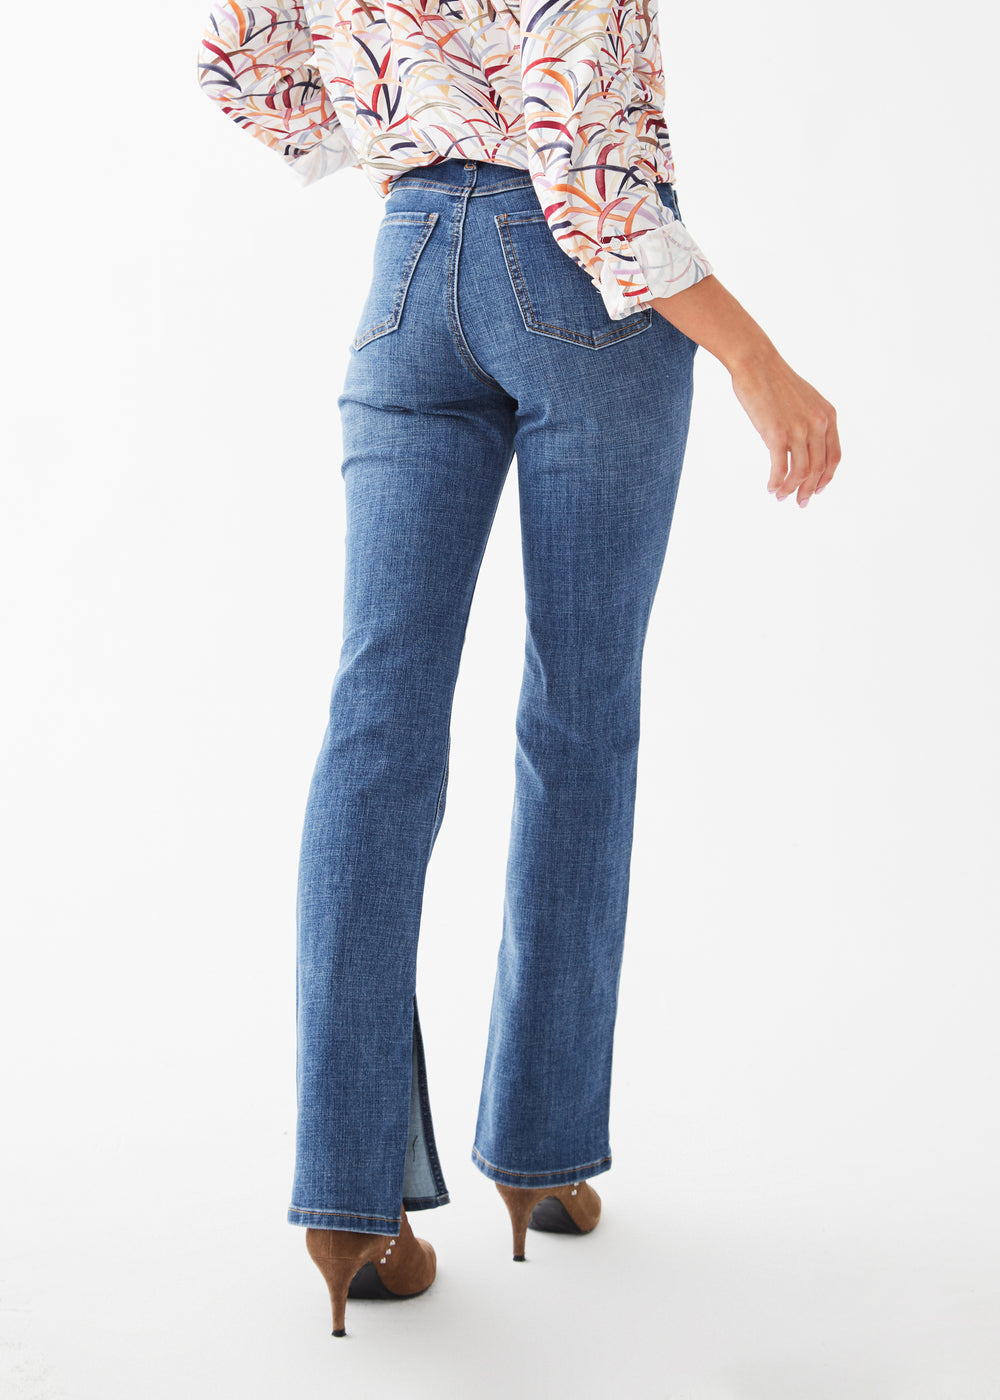 FDJ Olivia bootcut jeans 2182809, side-slit hem